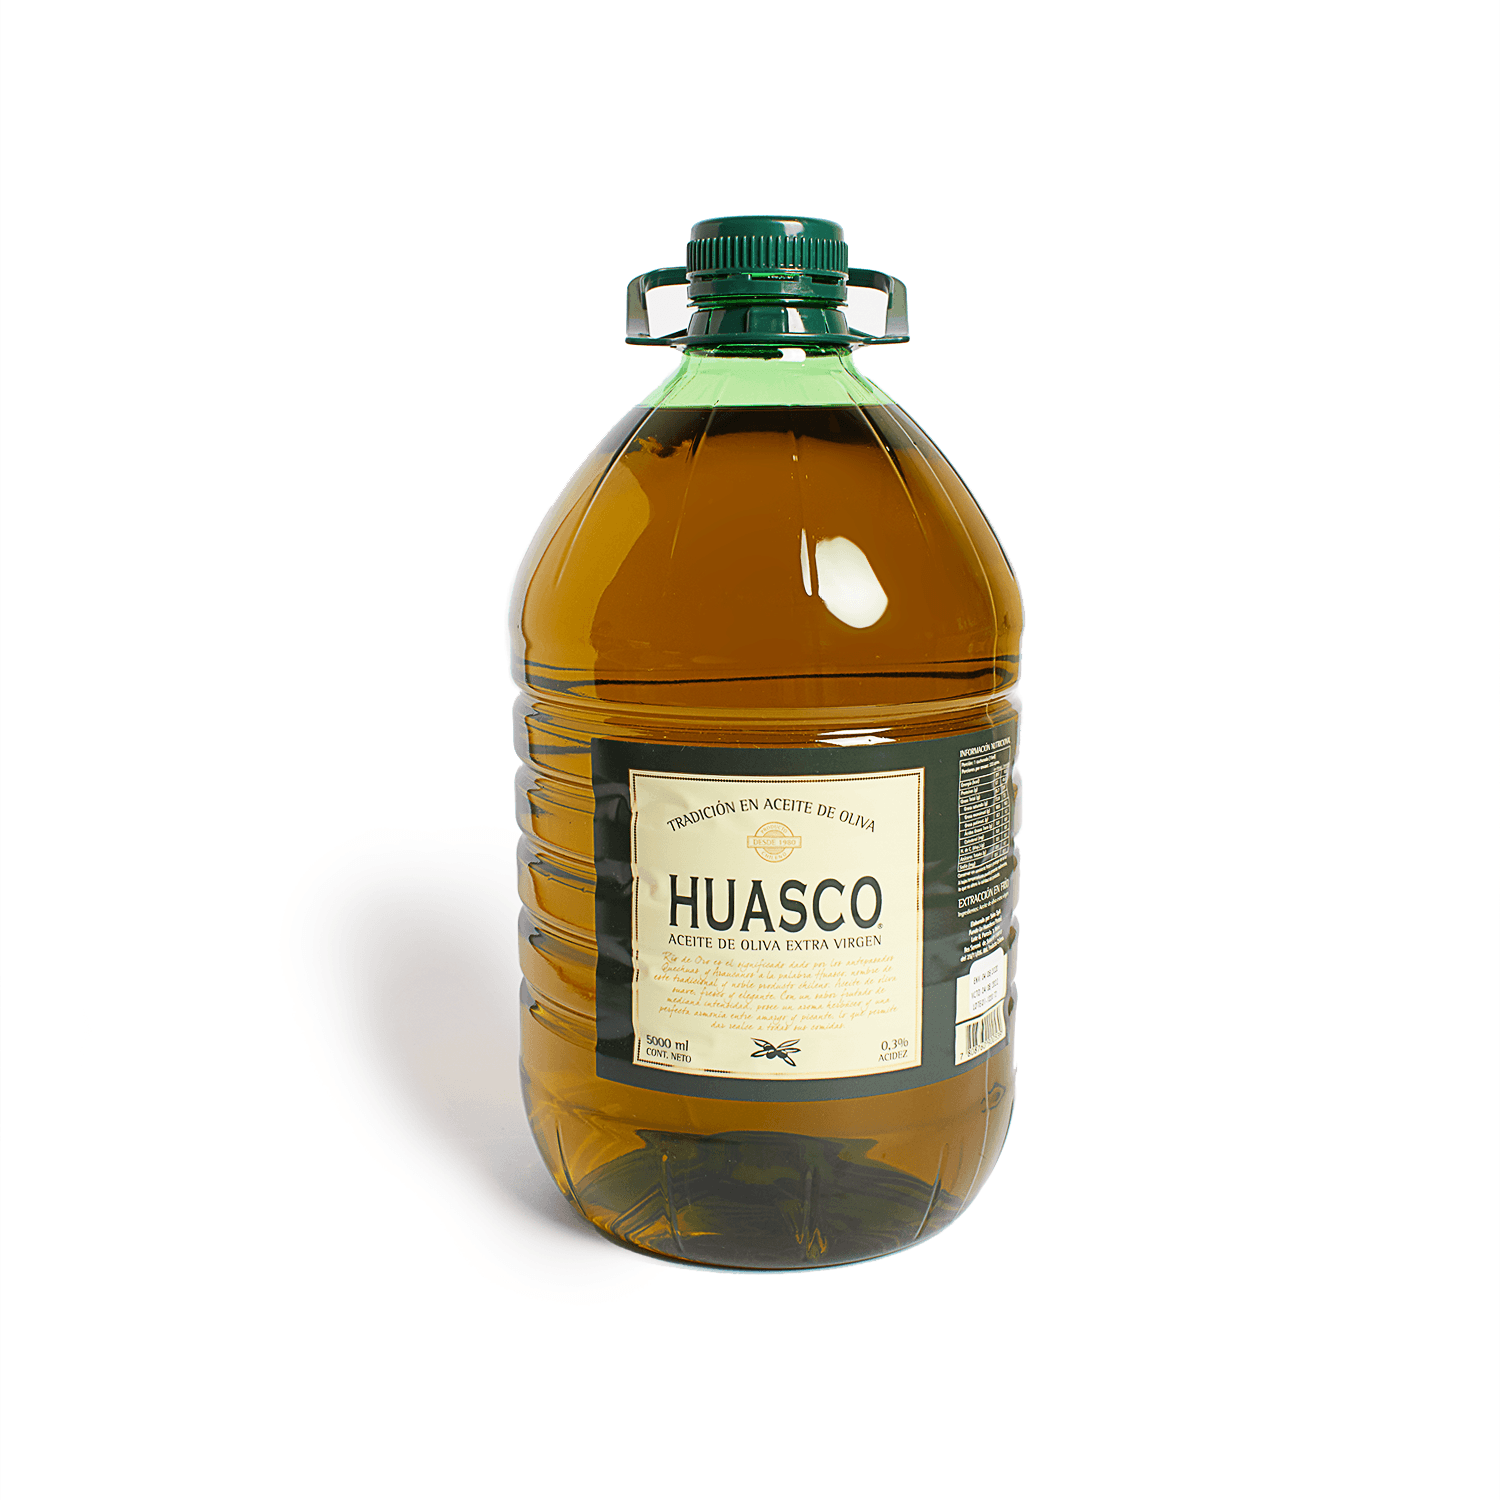 Aceite de oliva extra virgen, chileno (de O-Live & Co.)